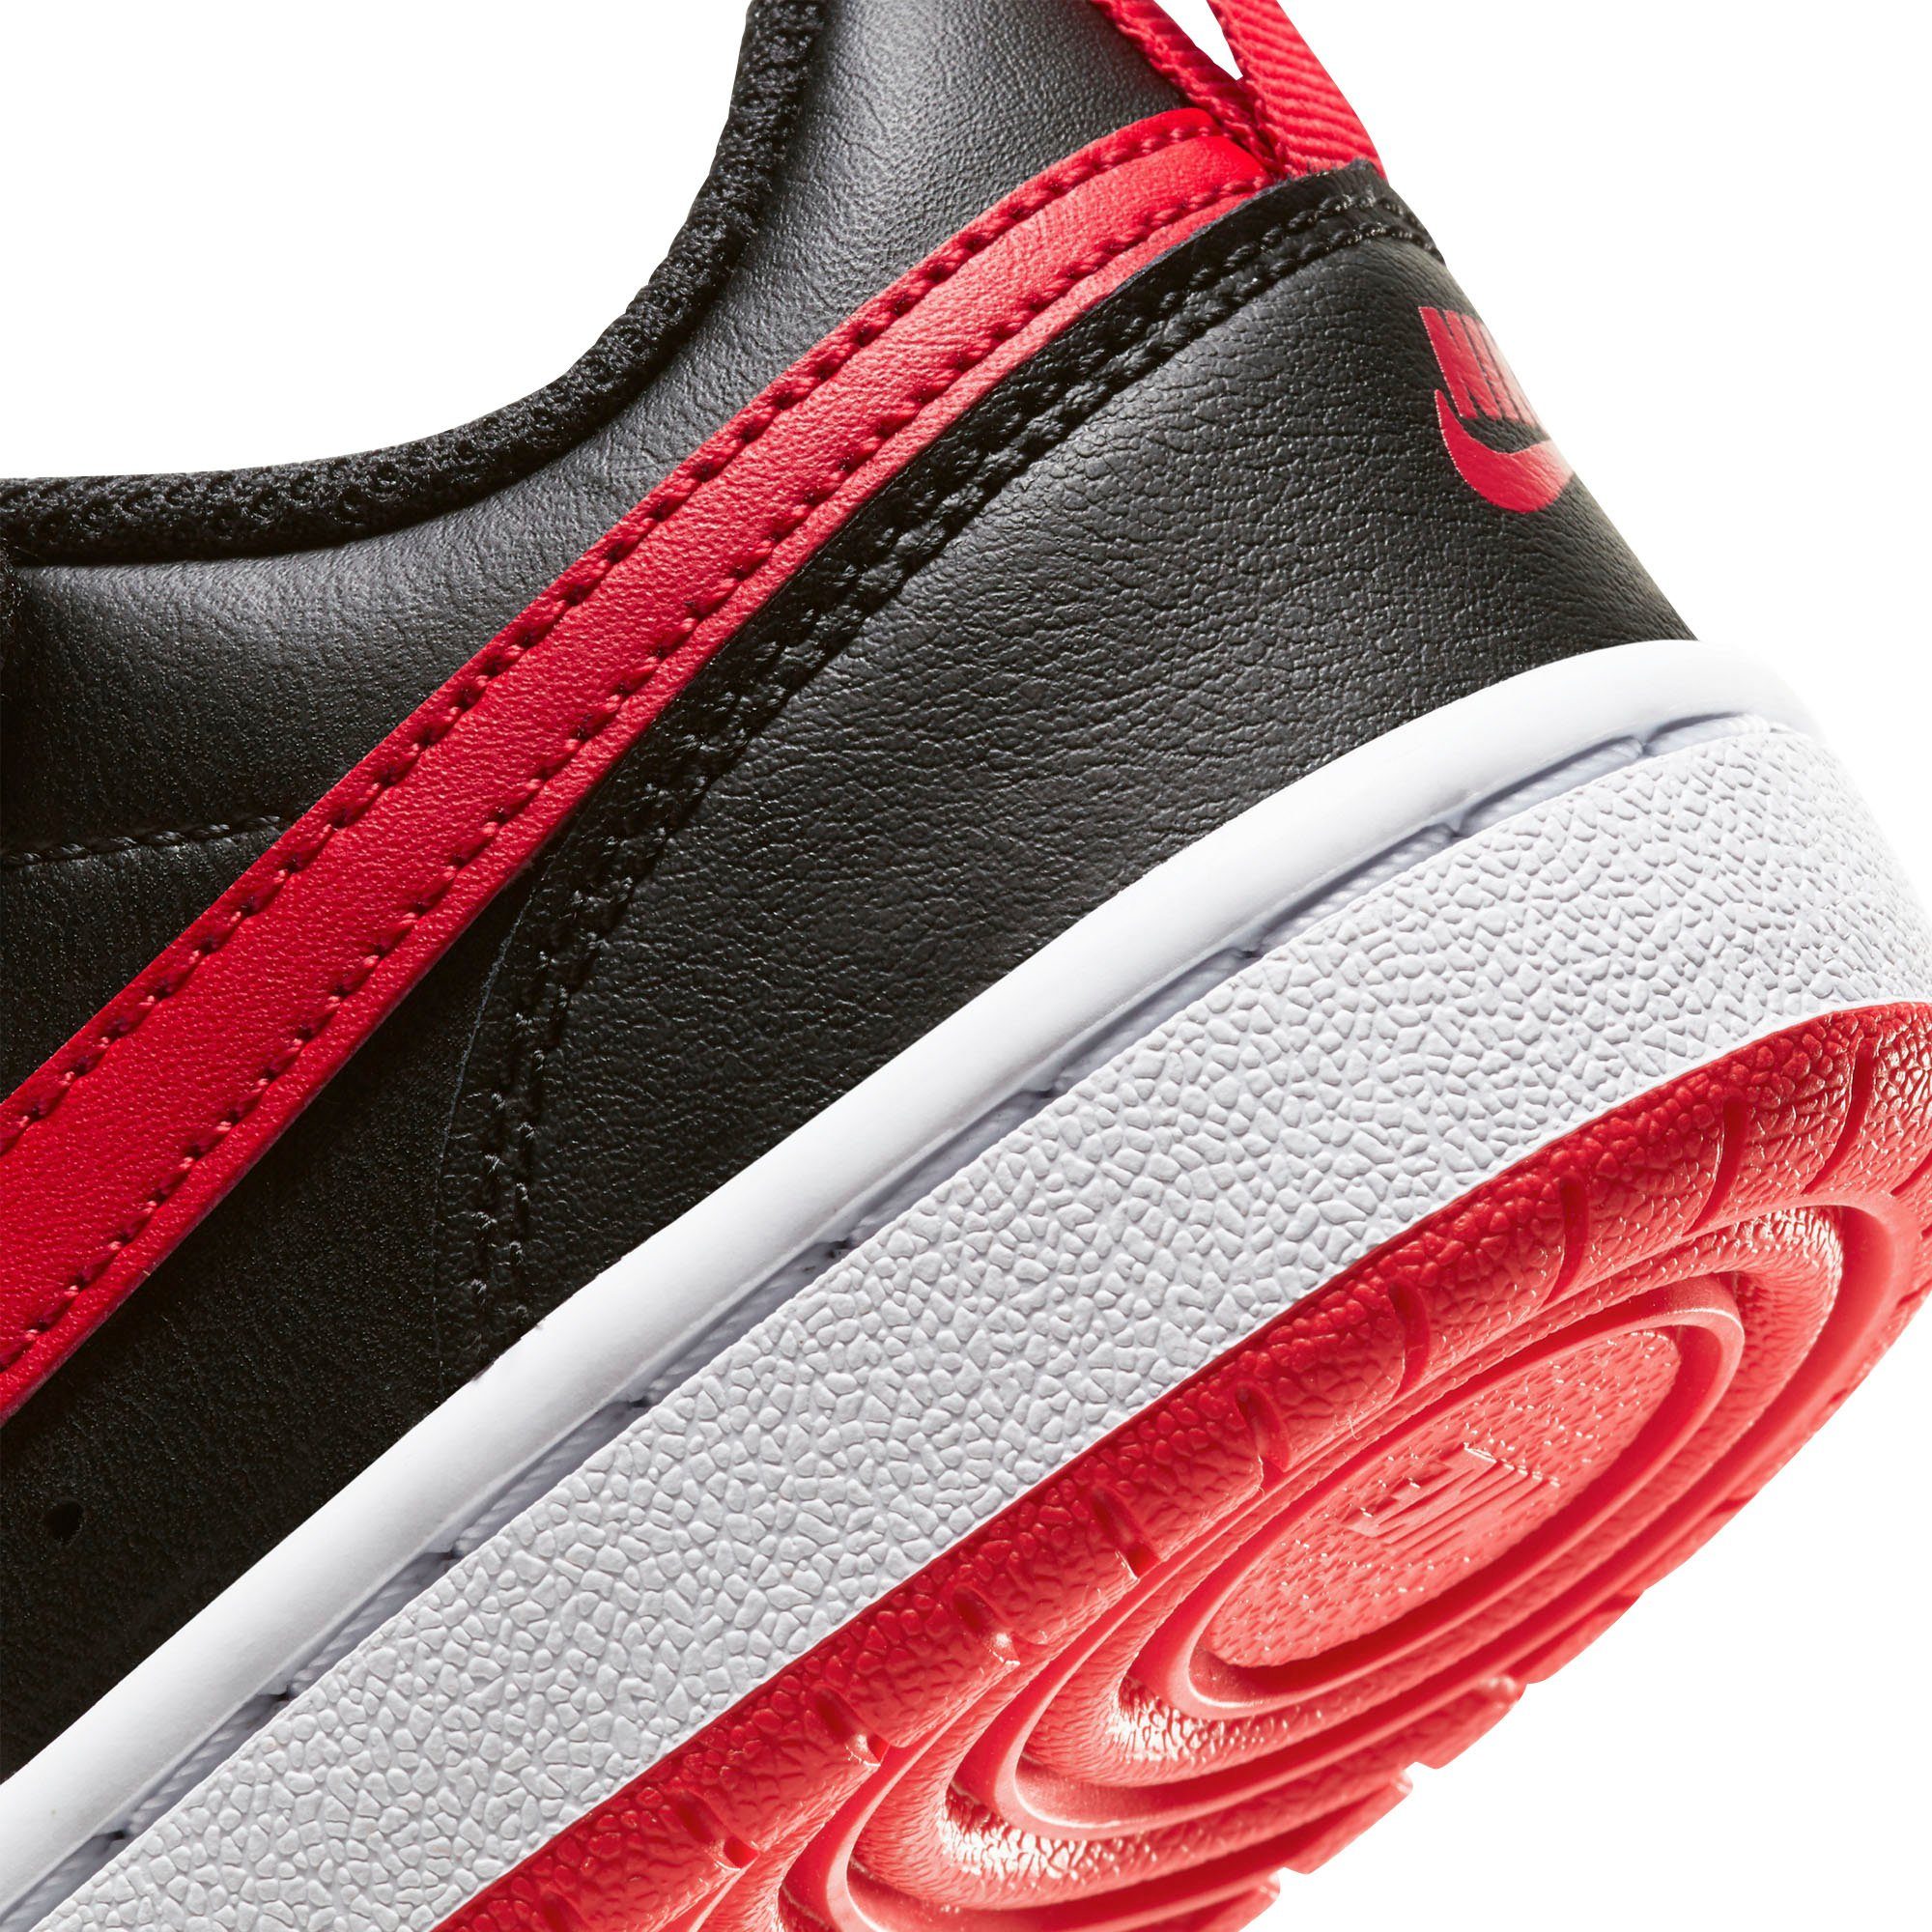 Court auf Spuren 1 Design Force Sportswear den Borough Sneaker Nike 2 Air Low des